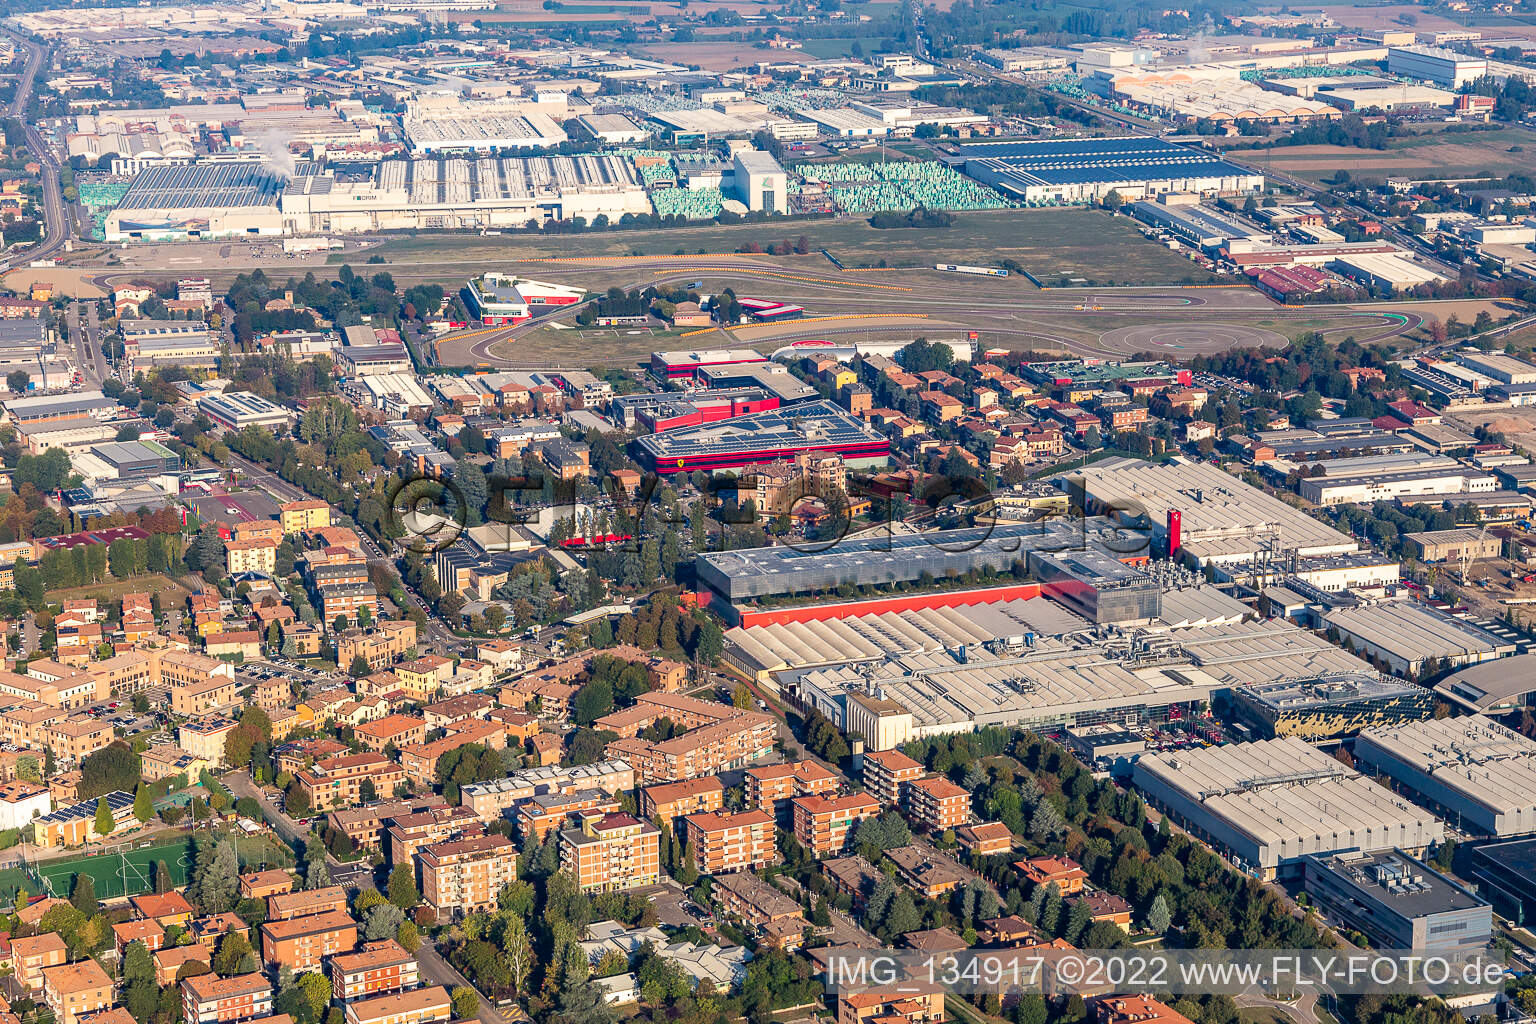 Luftbild von Ferrari S.P.A in Maranello im Bundesland Modena, Italien